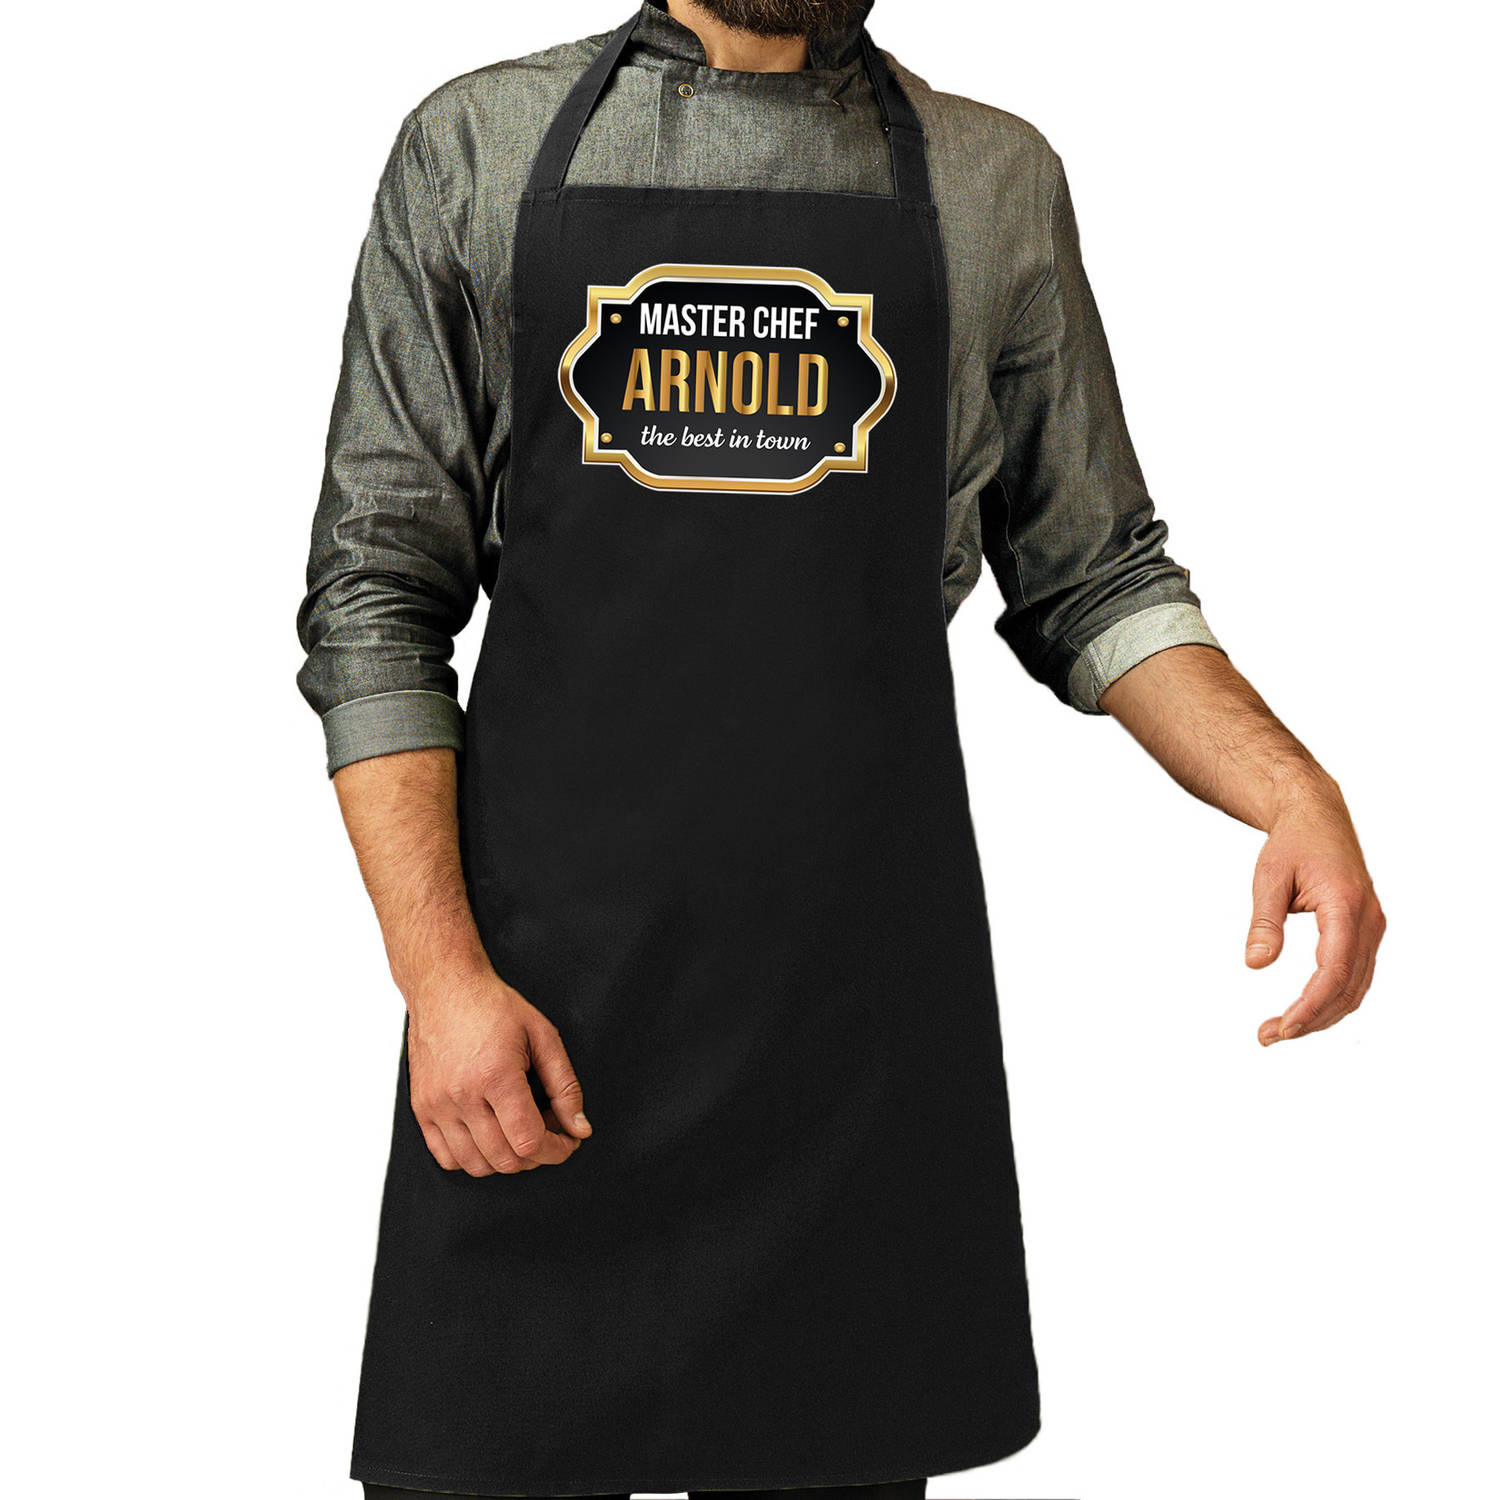 Chef arnold